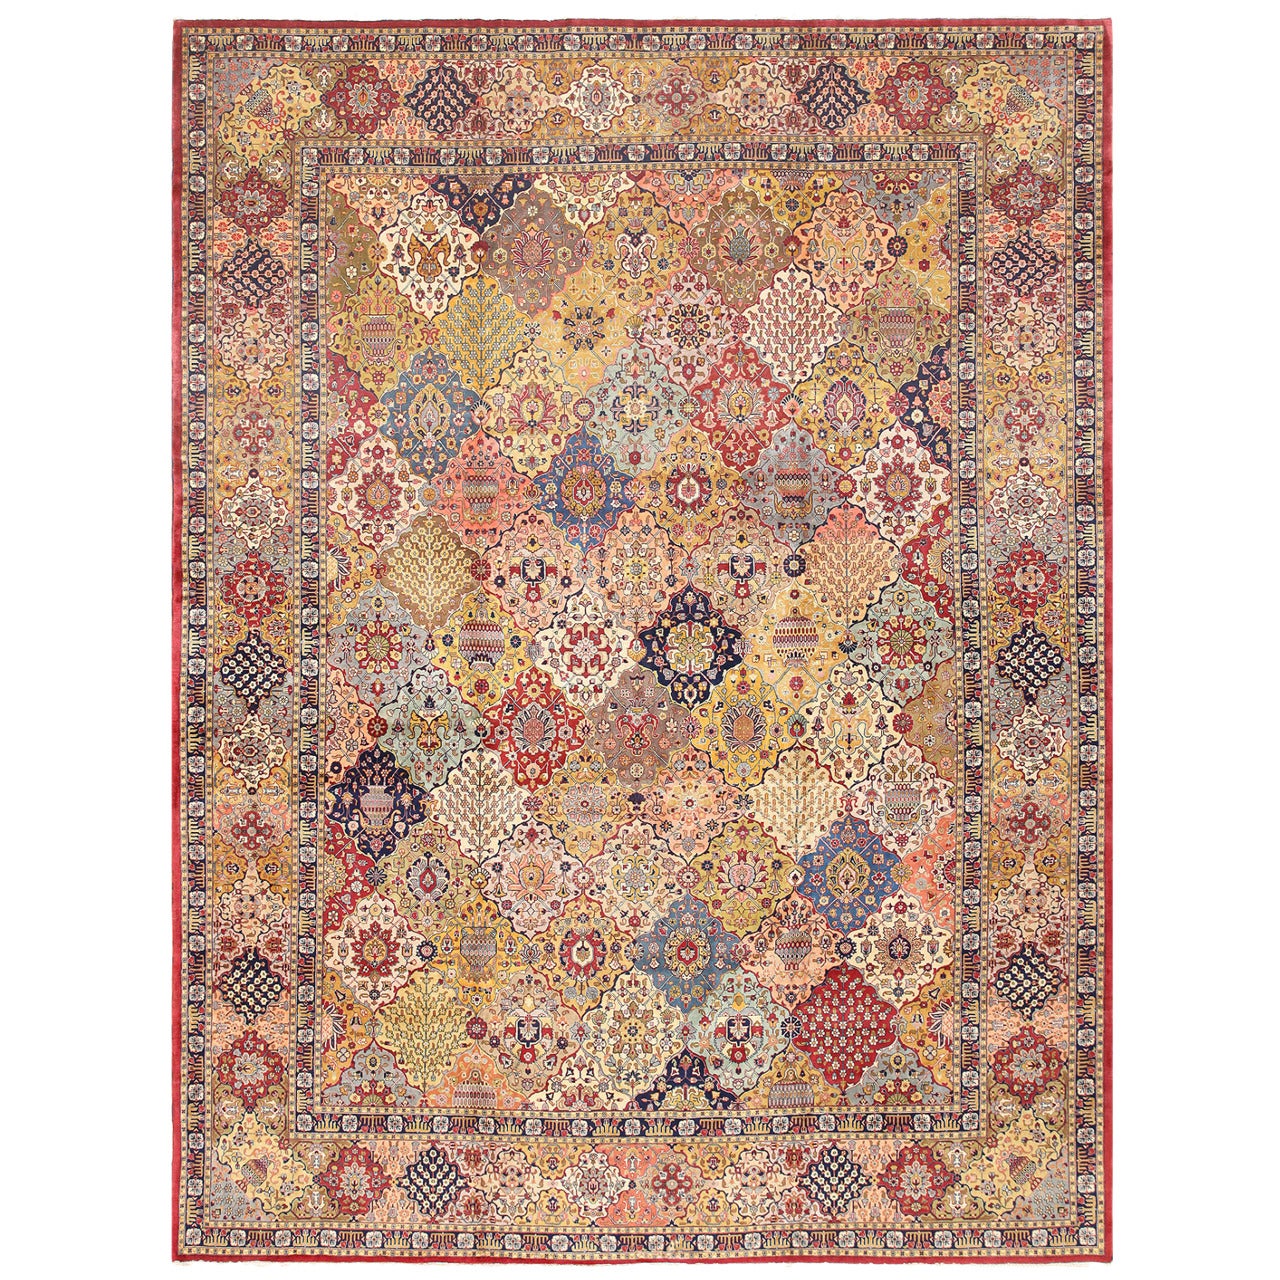 Extremely Fine Antique Tabriz Persian Carpet